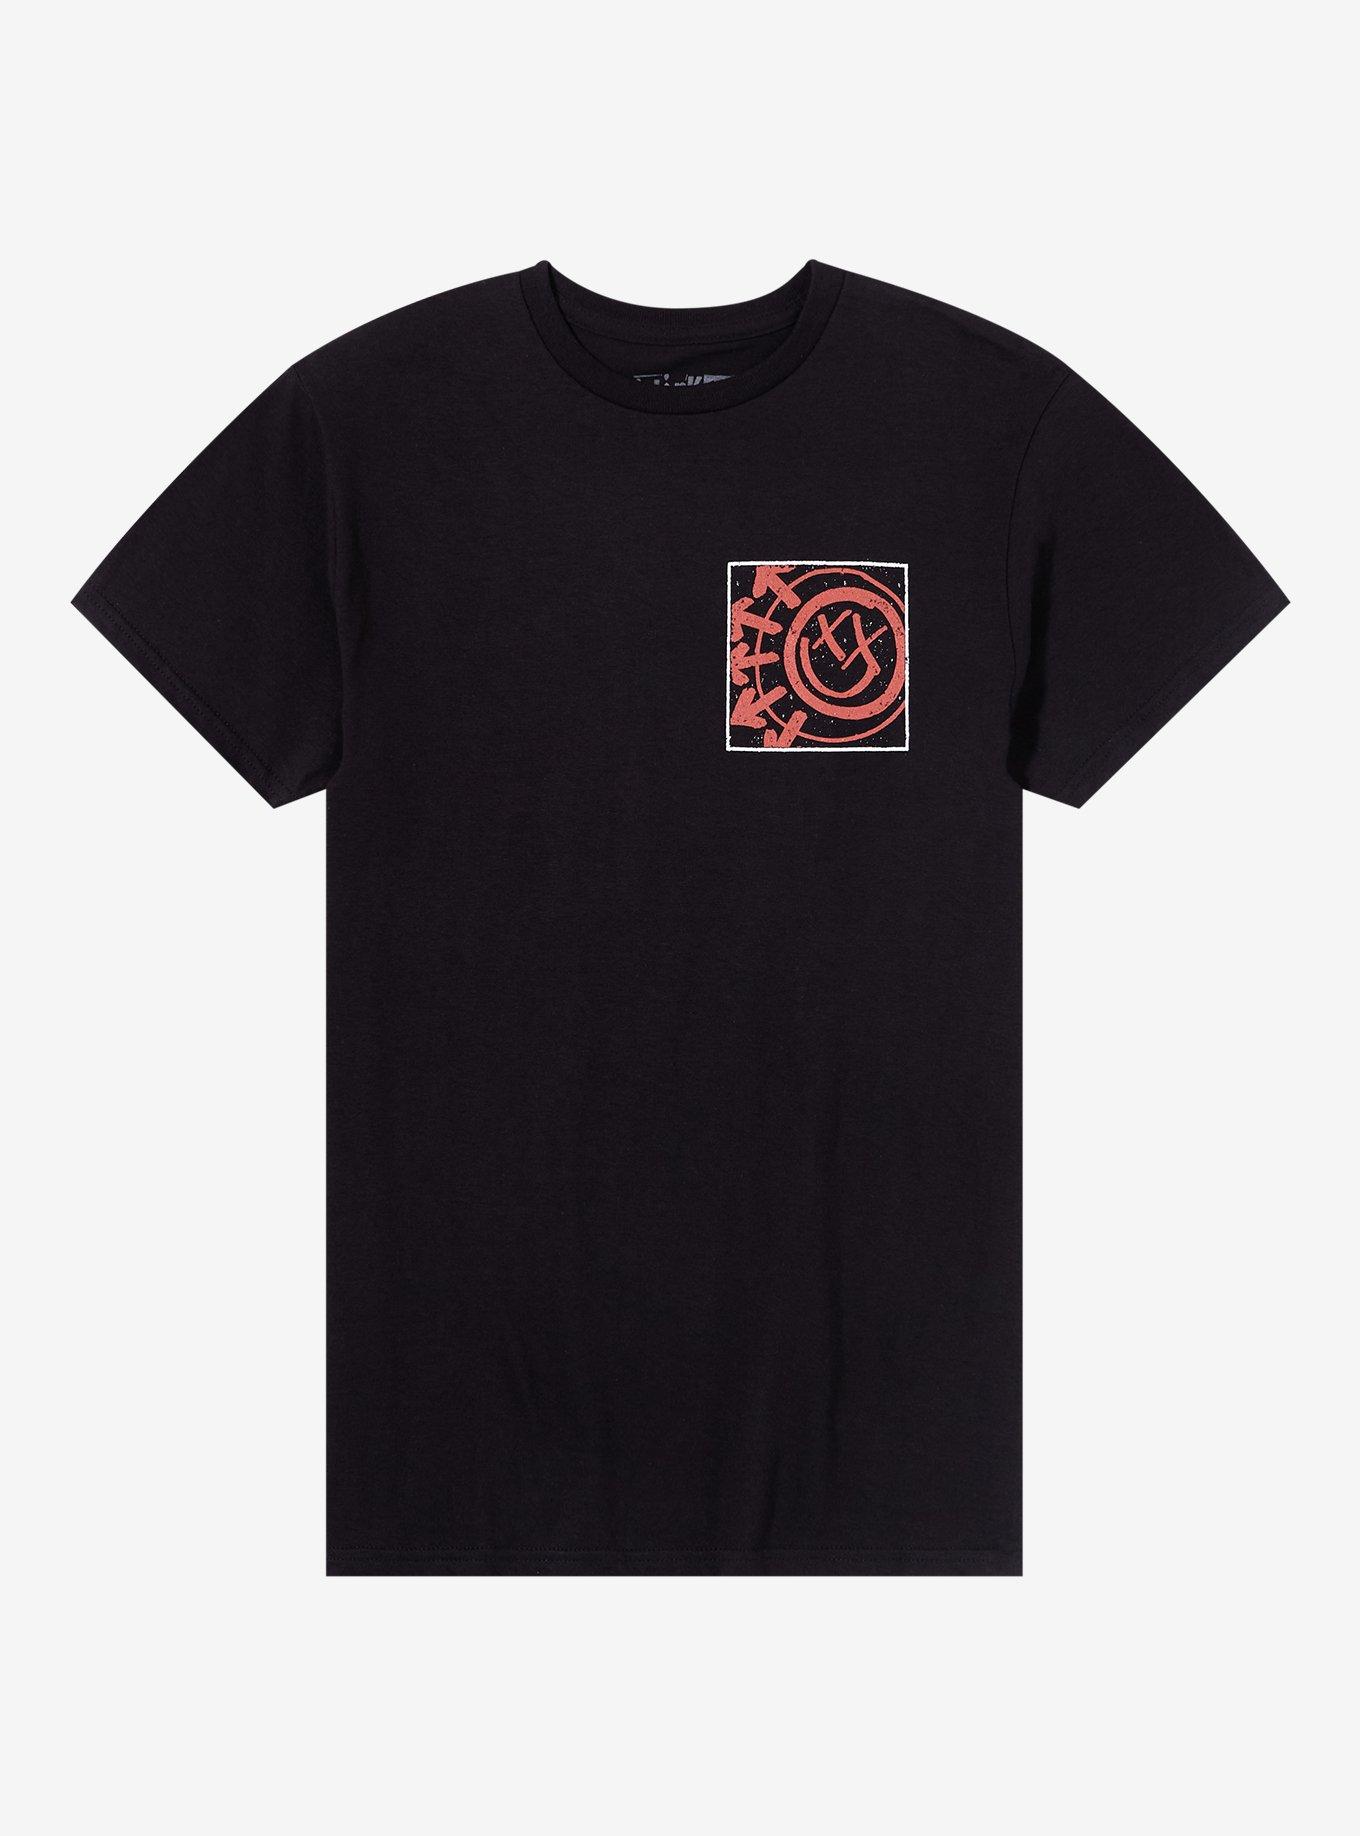 Blink-182 Two-Sided Logo Boyfriend Fit Girls T-Shirt, BLACK, hi-res